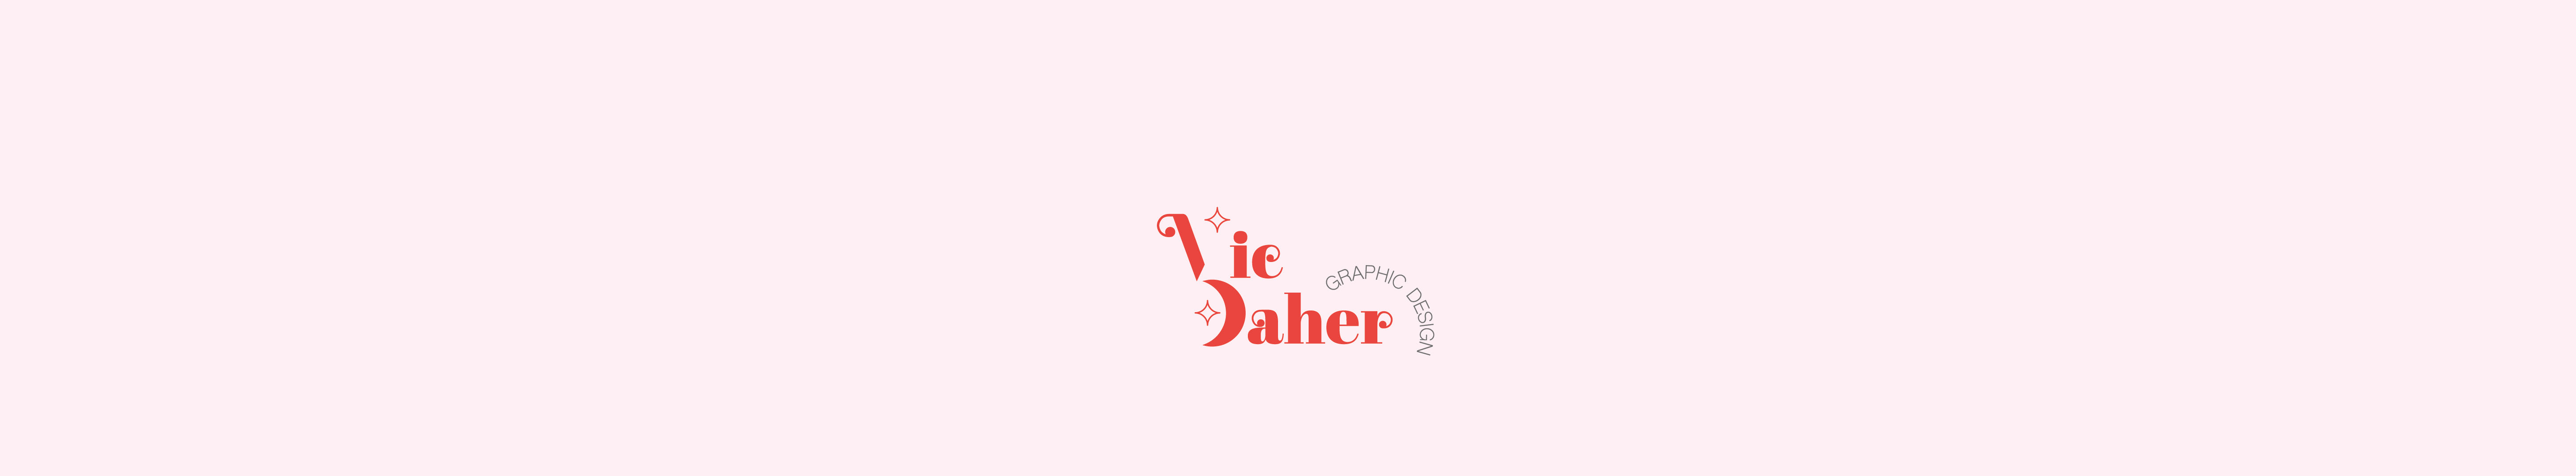 Victoria Dahers profilbanner